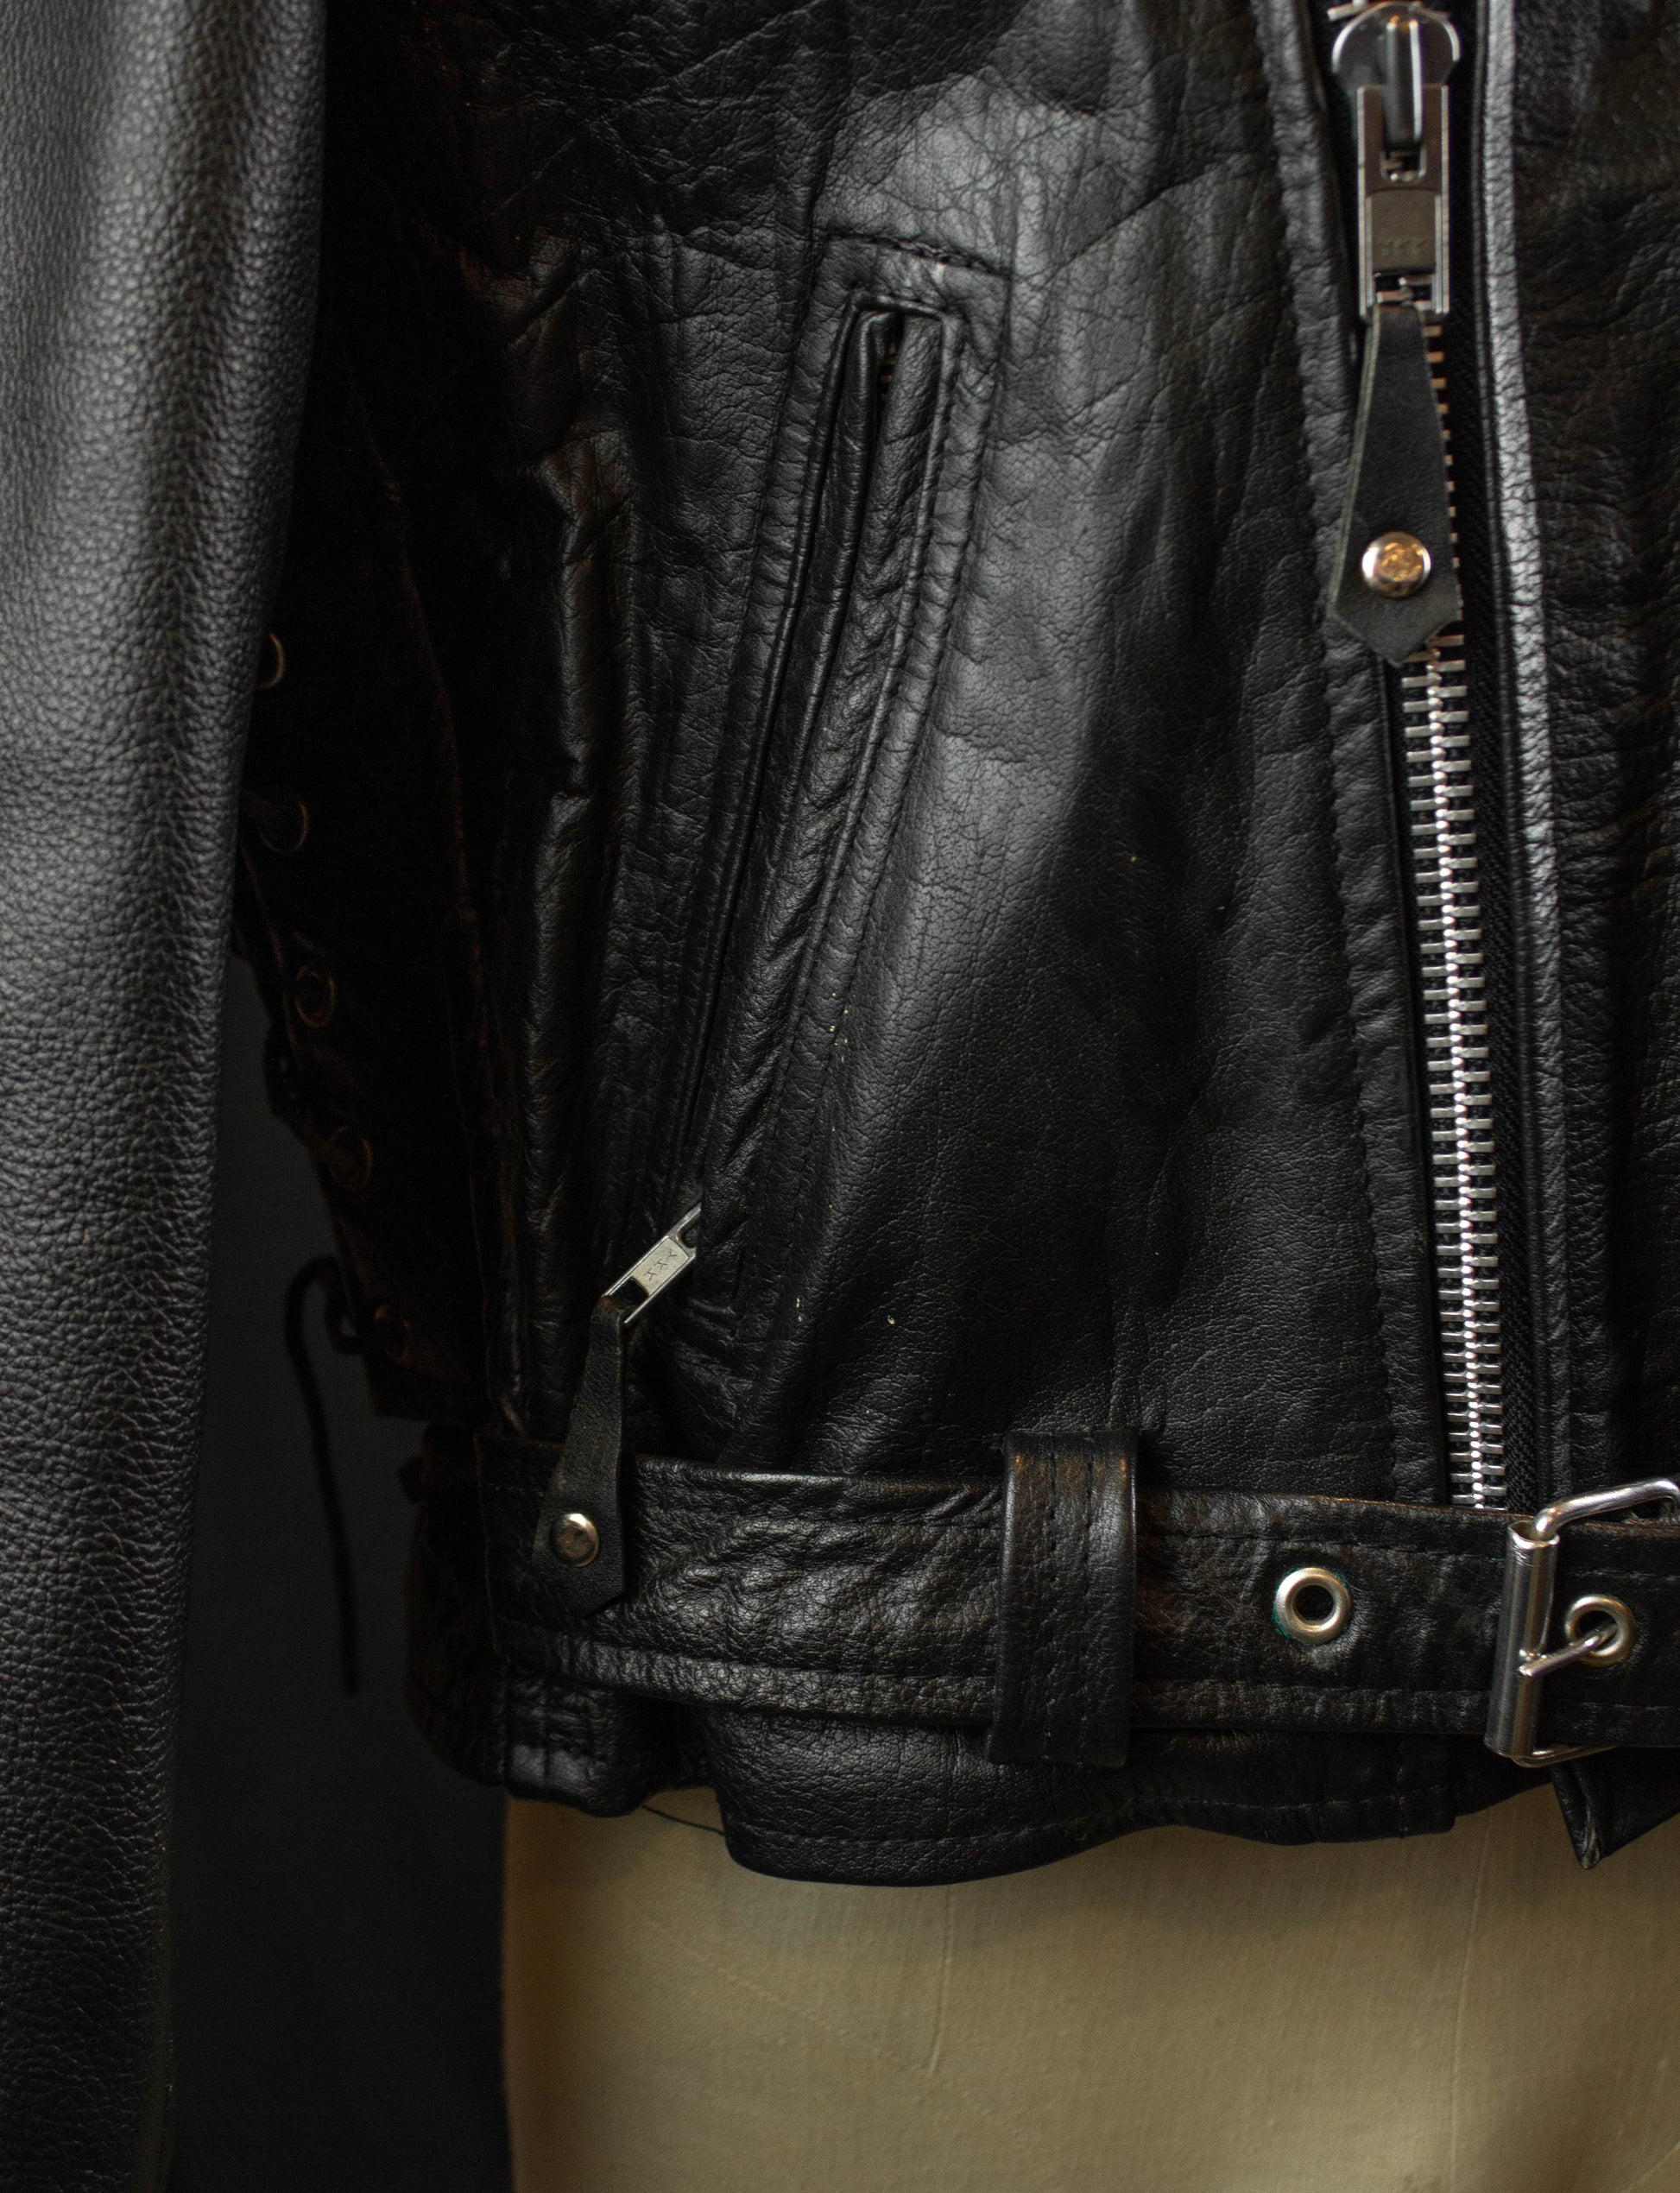 Vintage Leather Club Belted Leather Biker Jacket 80s Black and Silver Large